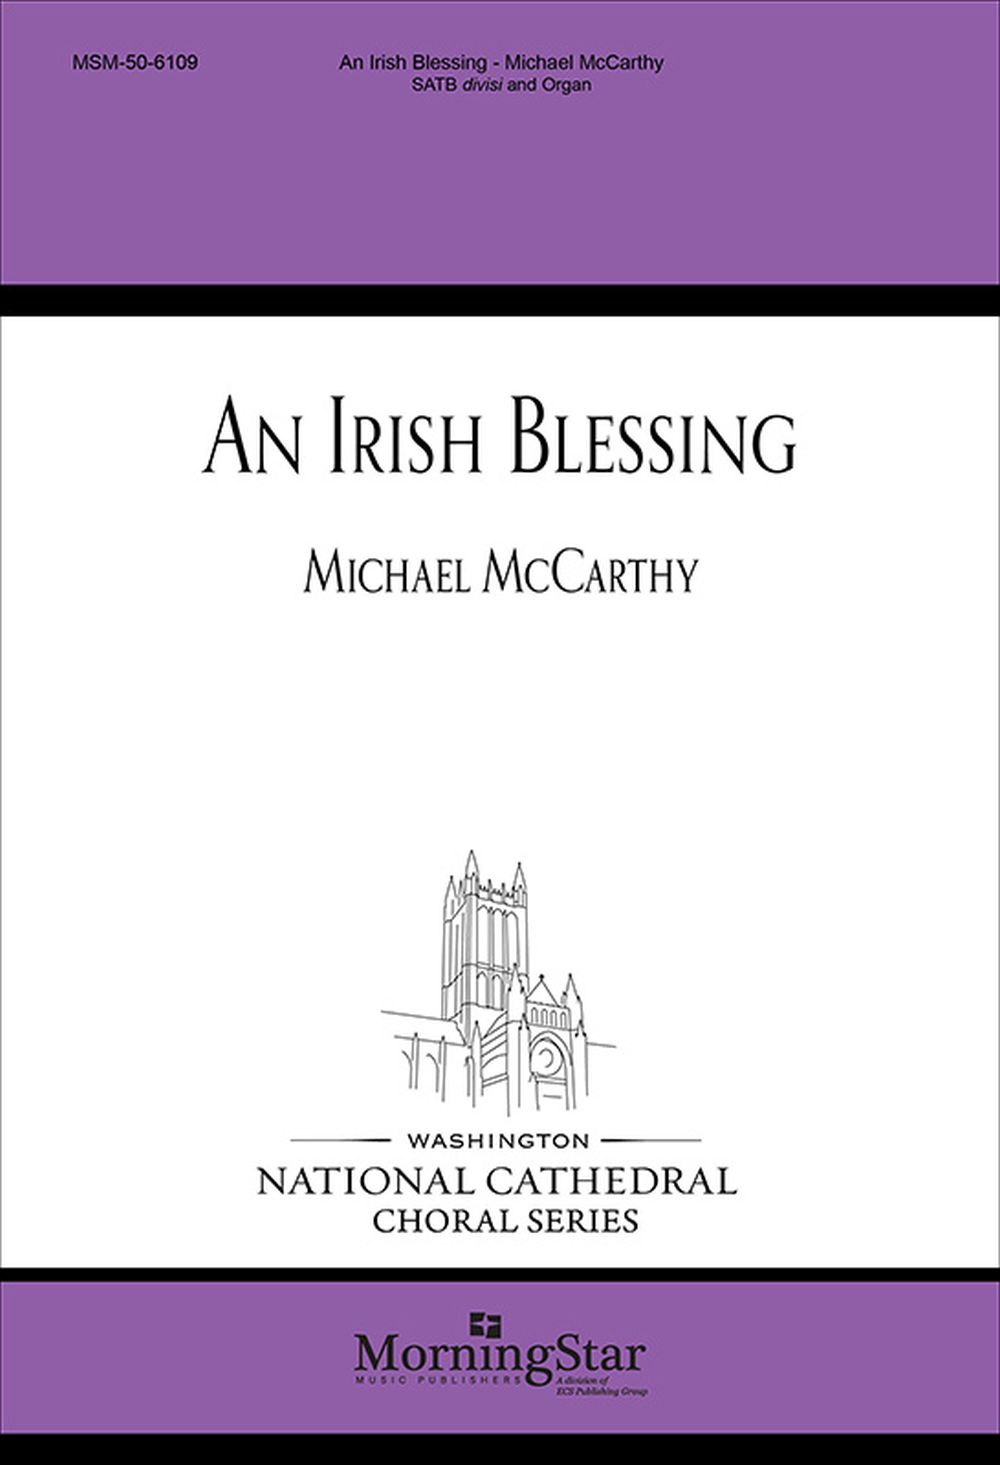 Michael McCarthy: An Irish Blessing: SATB: Vocal Score